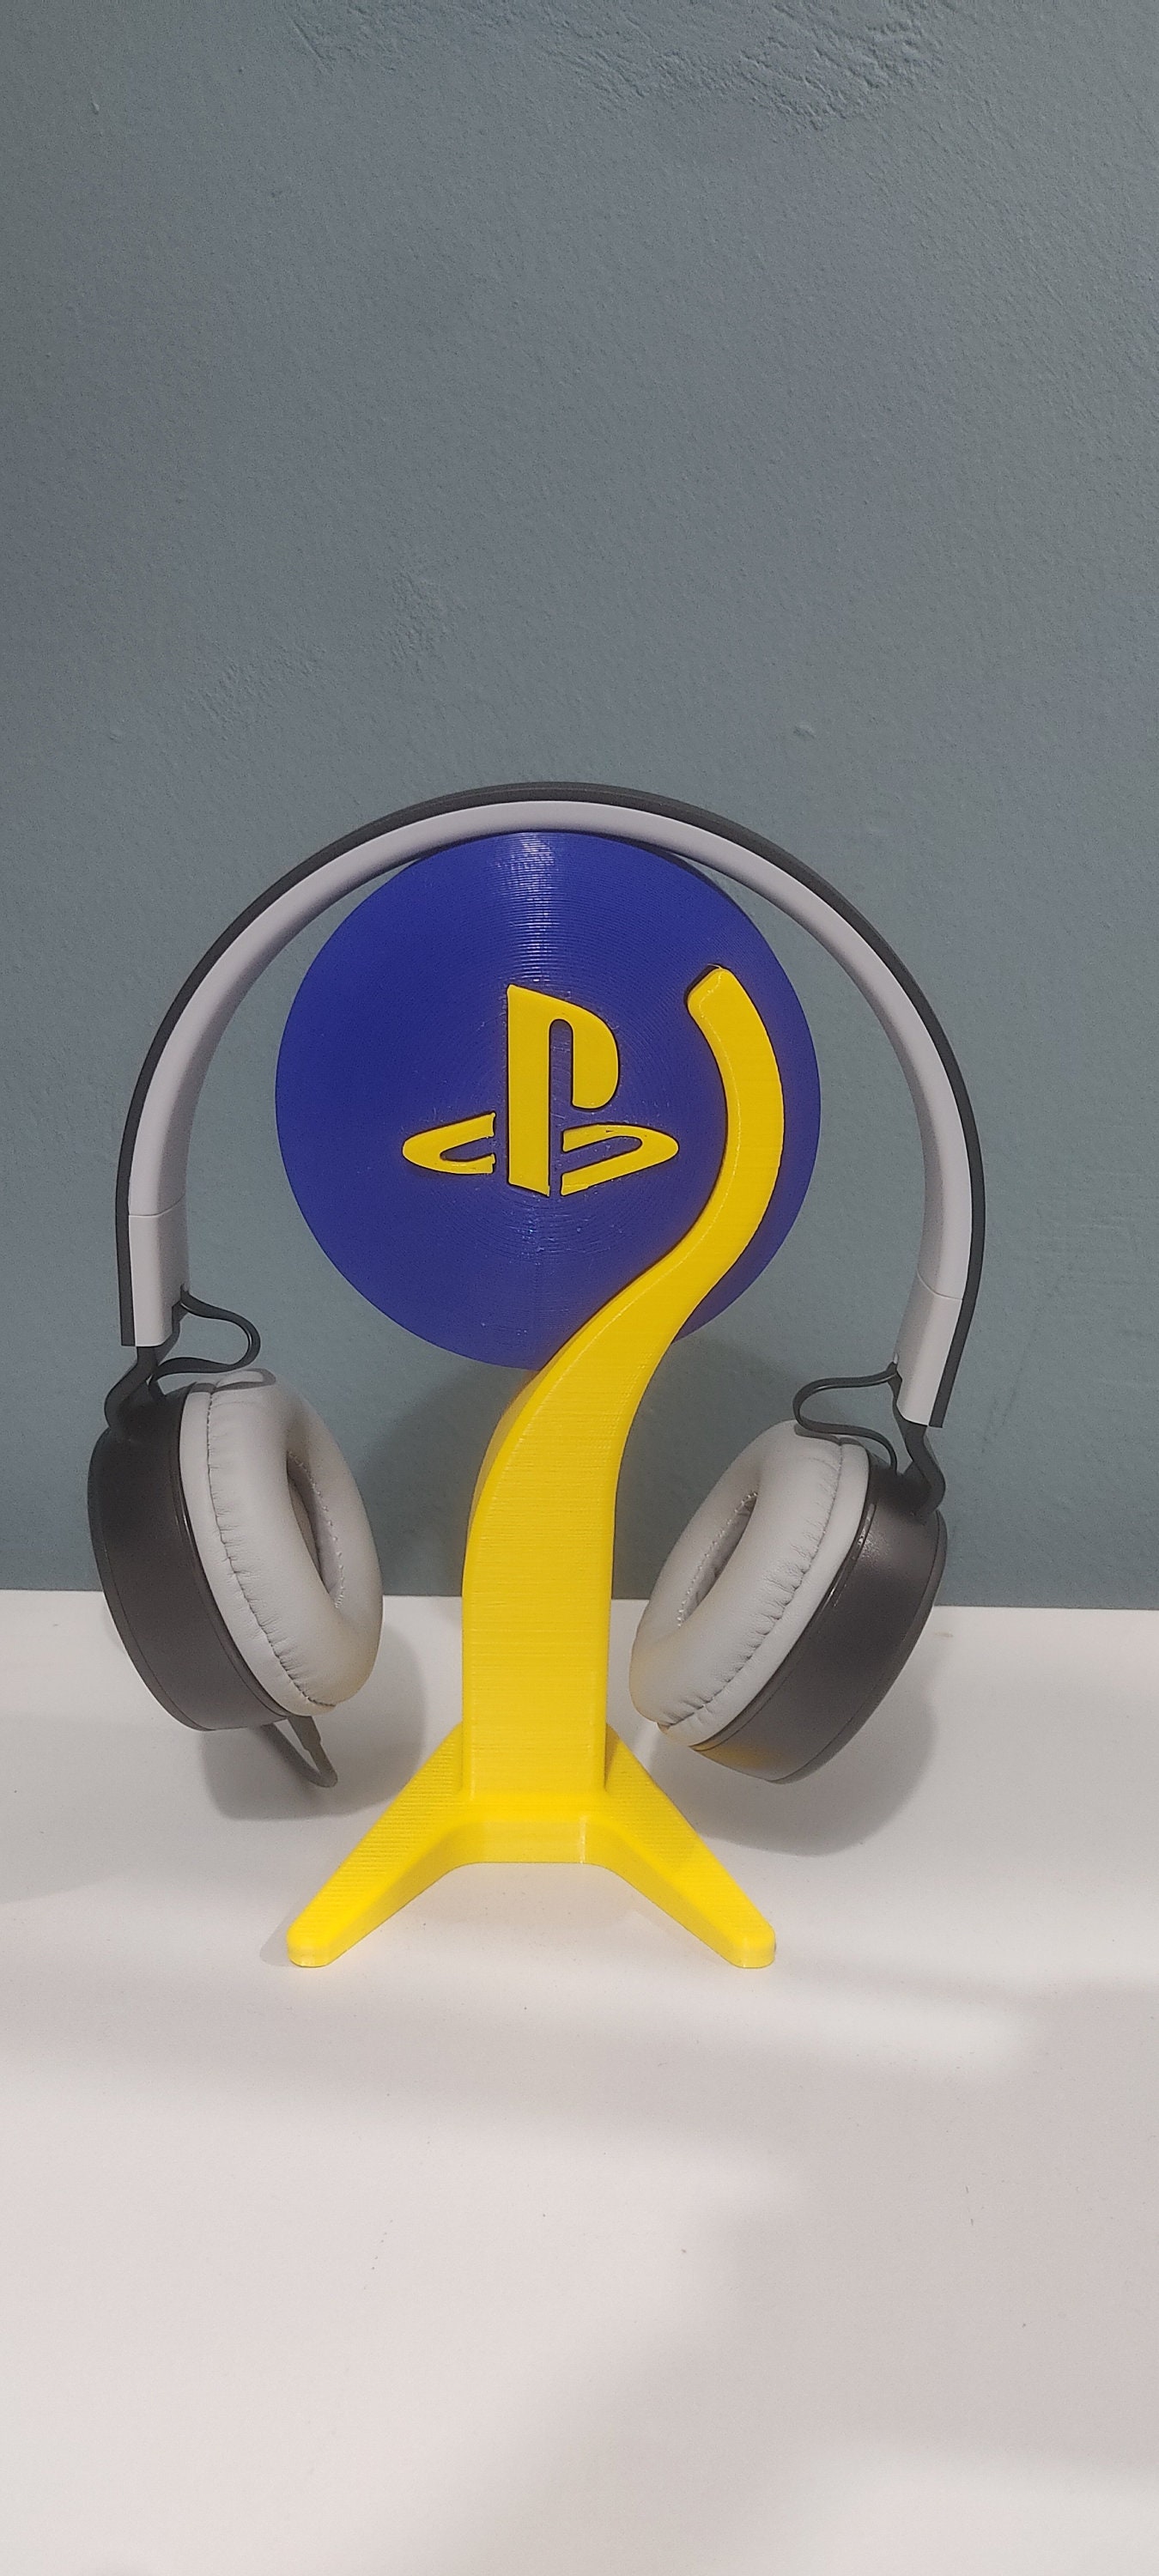 PS5 3D Pulse Wireless Headset — X Uruguay